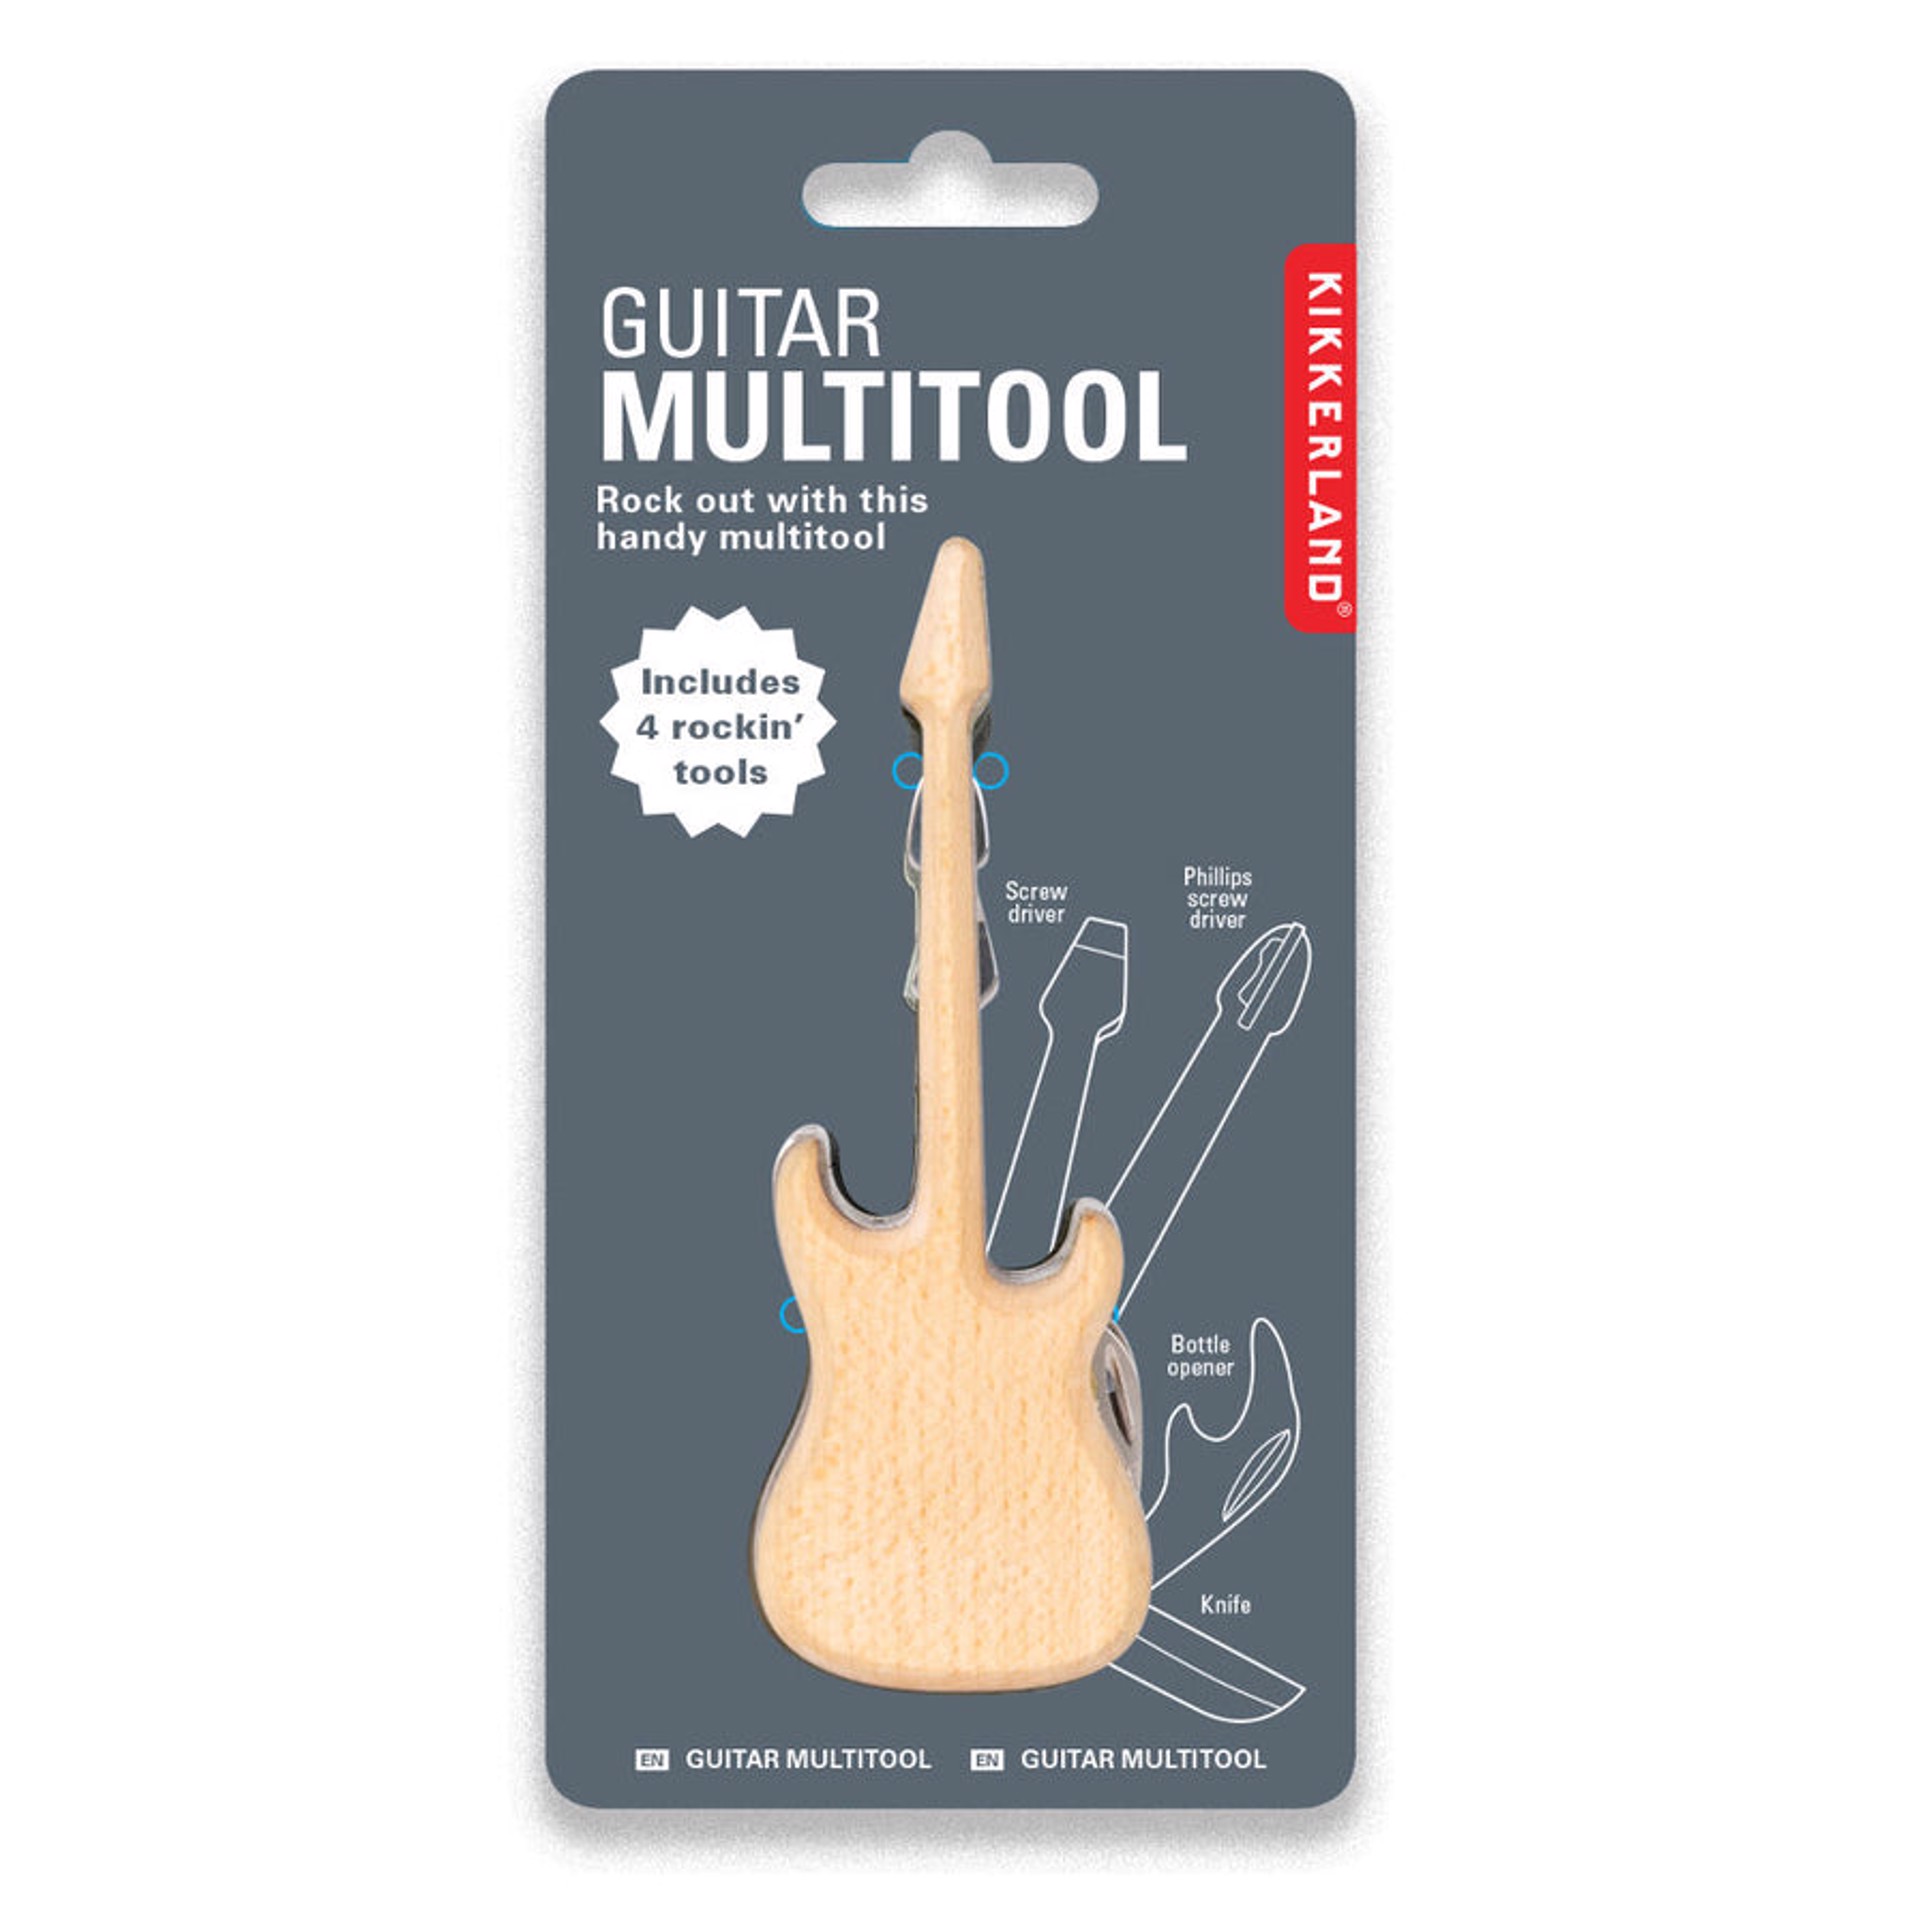 Guitar Multi-Tool by Chauvet Arts